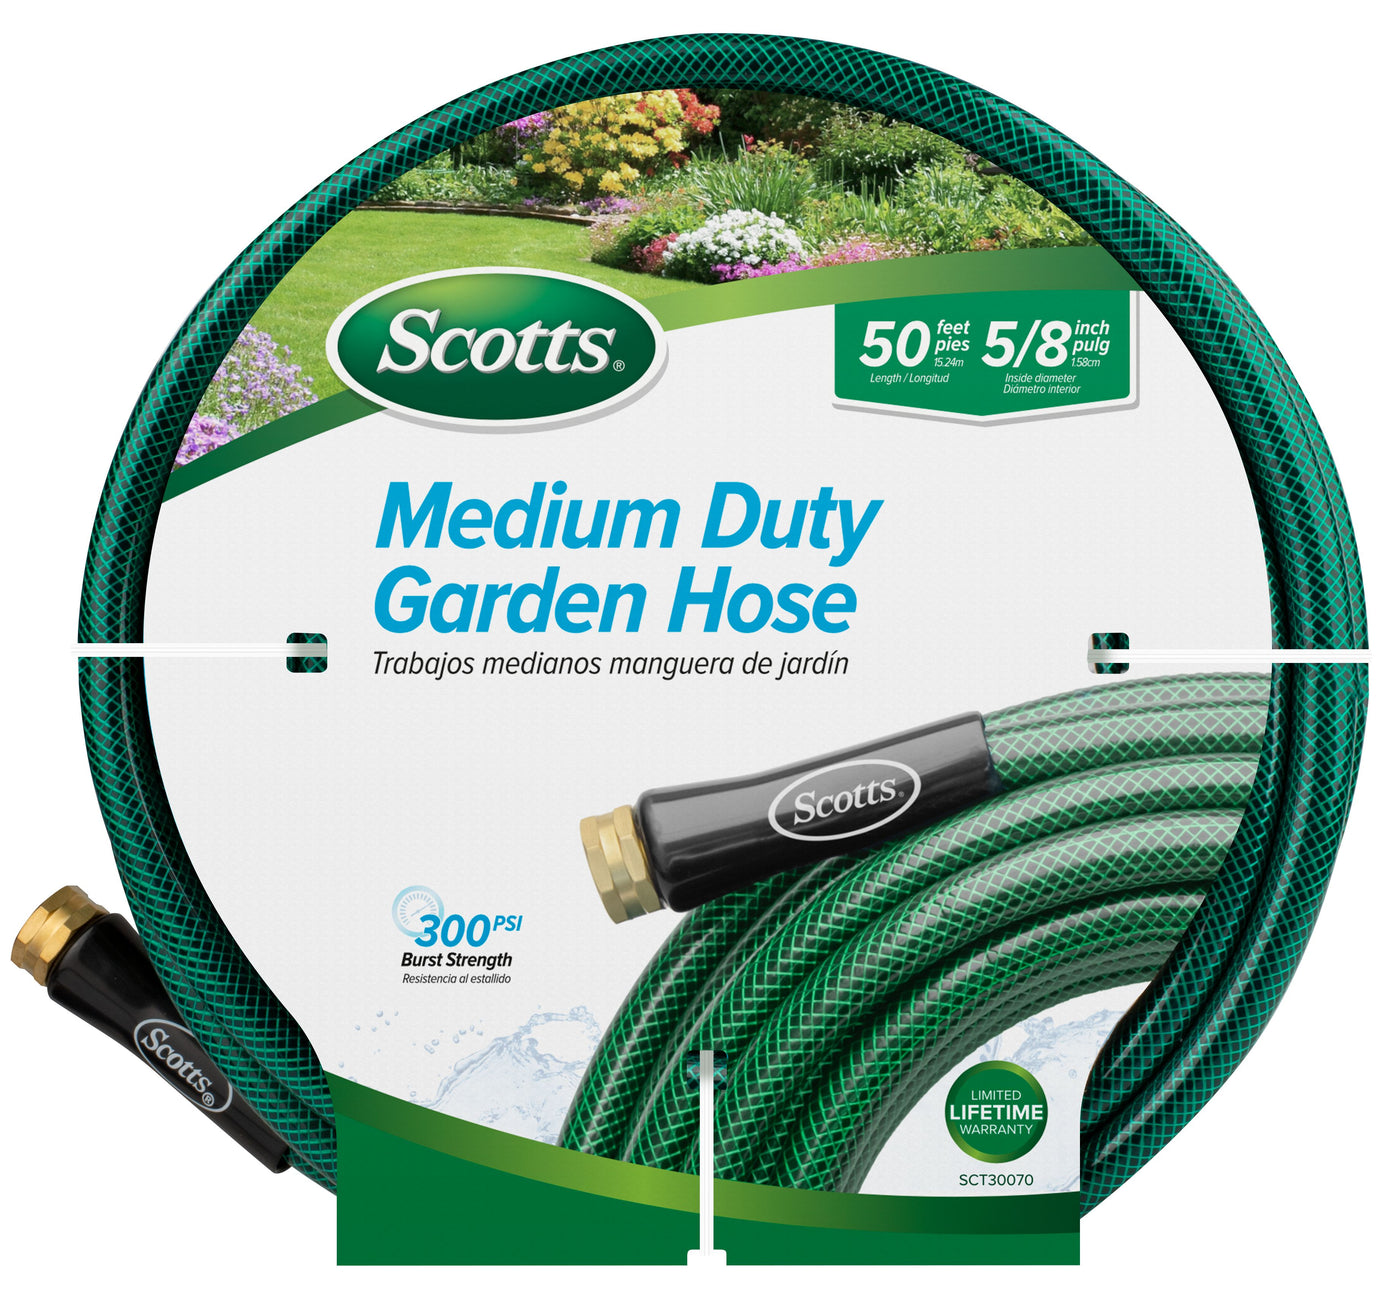 Scotts 50 ft. x 5/8 inch Medium Duty Garden Hose